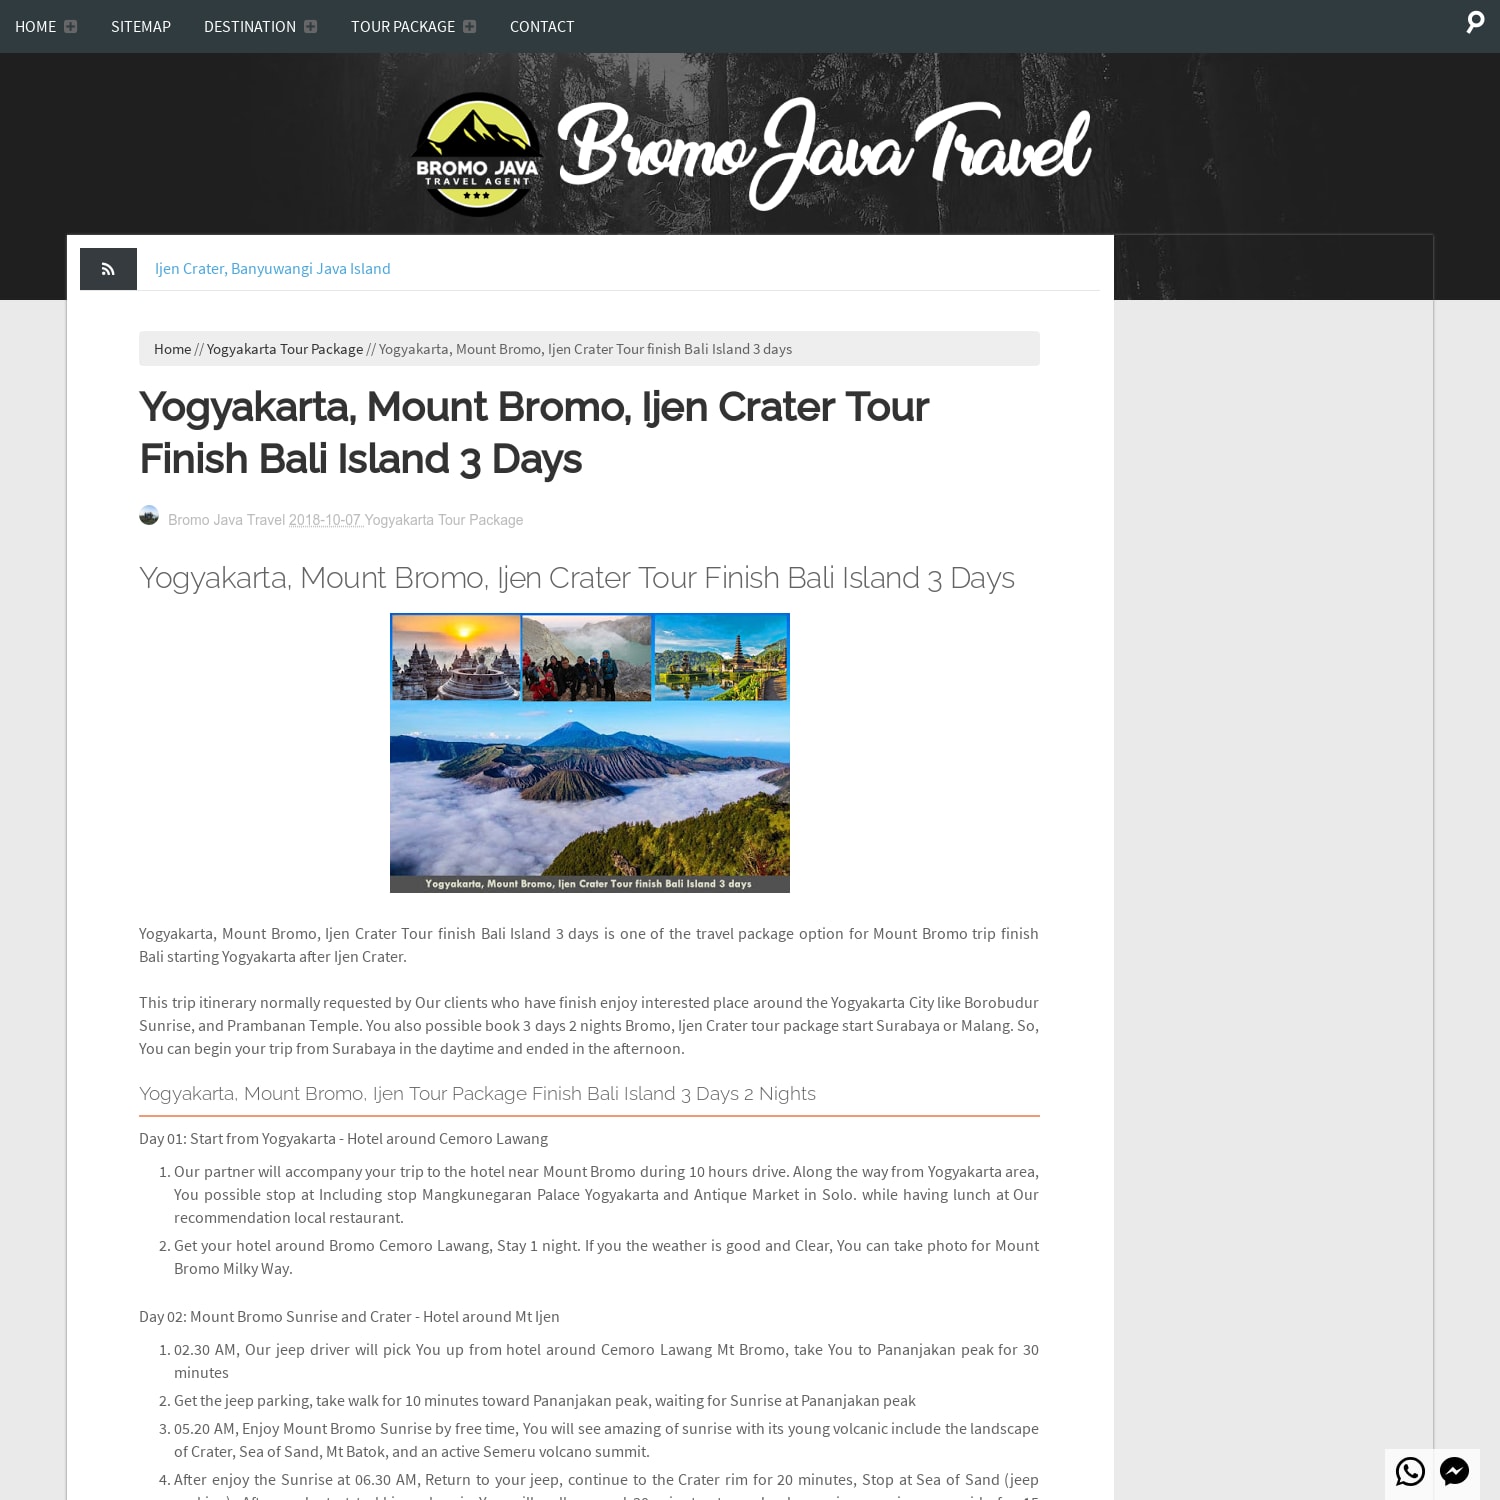 Yogyakarta, Mount Bromo, Ijen Crater Tour finish Bali Island 3 days